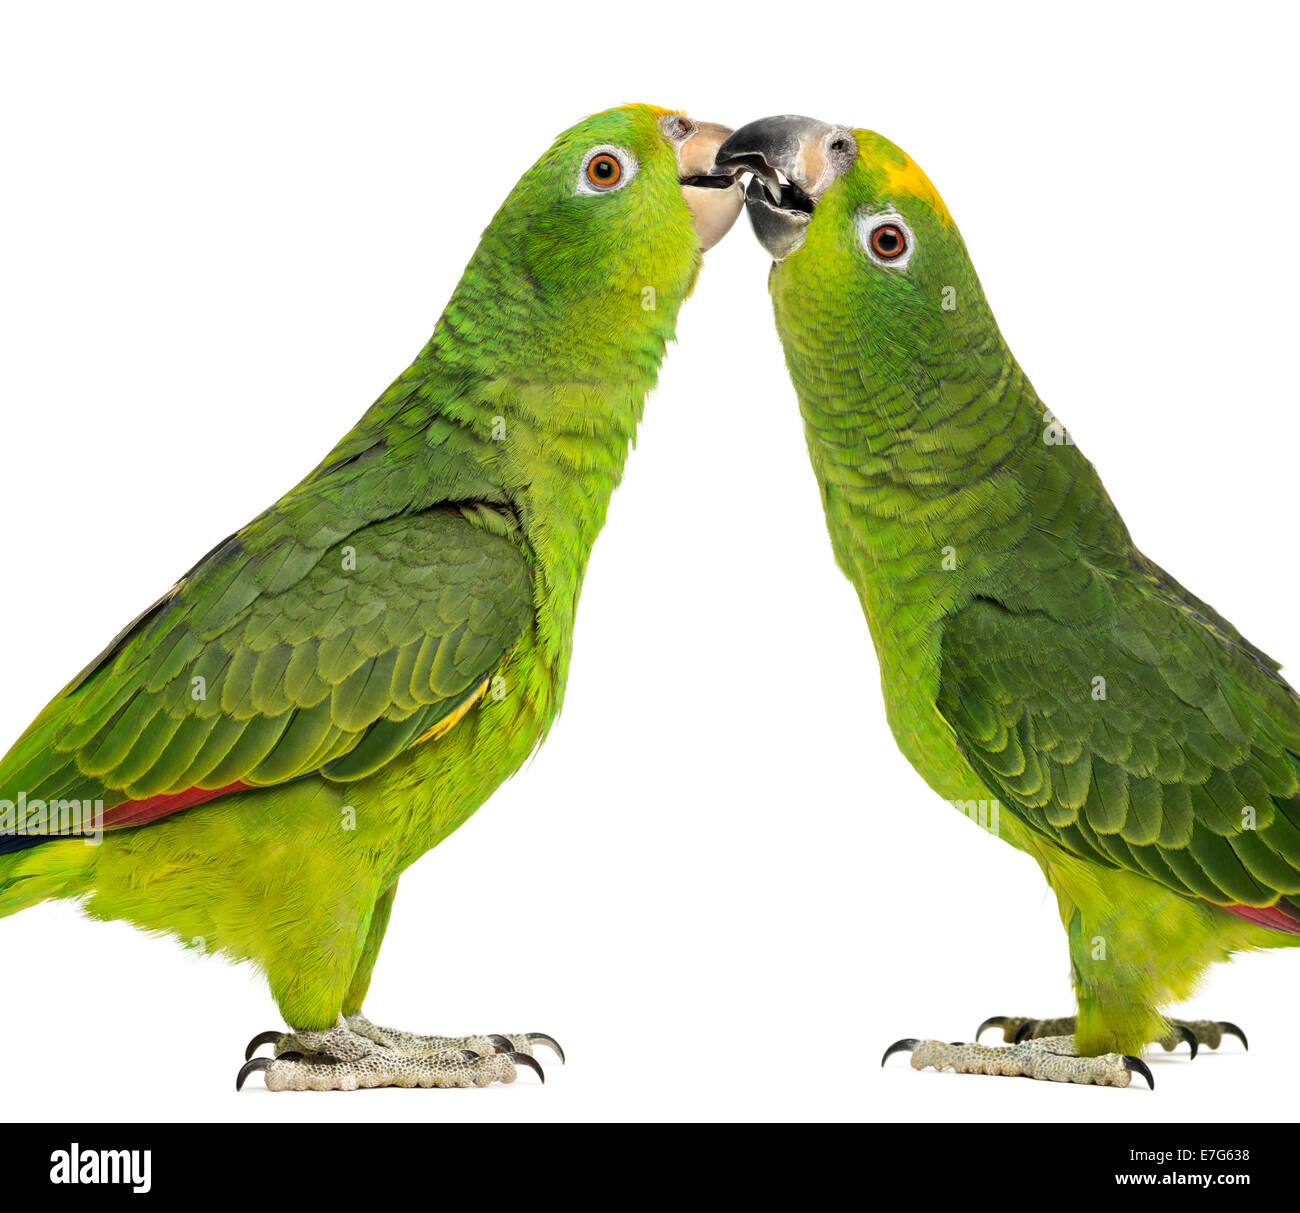 Panama Amazon and Yellow-crowned Amazon parrots pecking, isolated on white Stock Photo